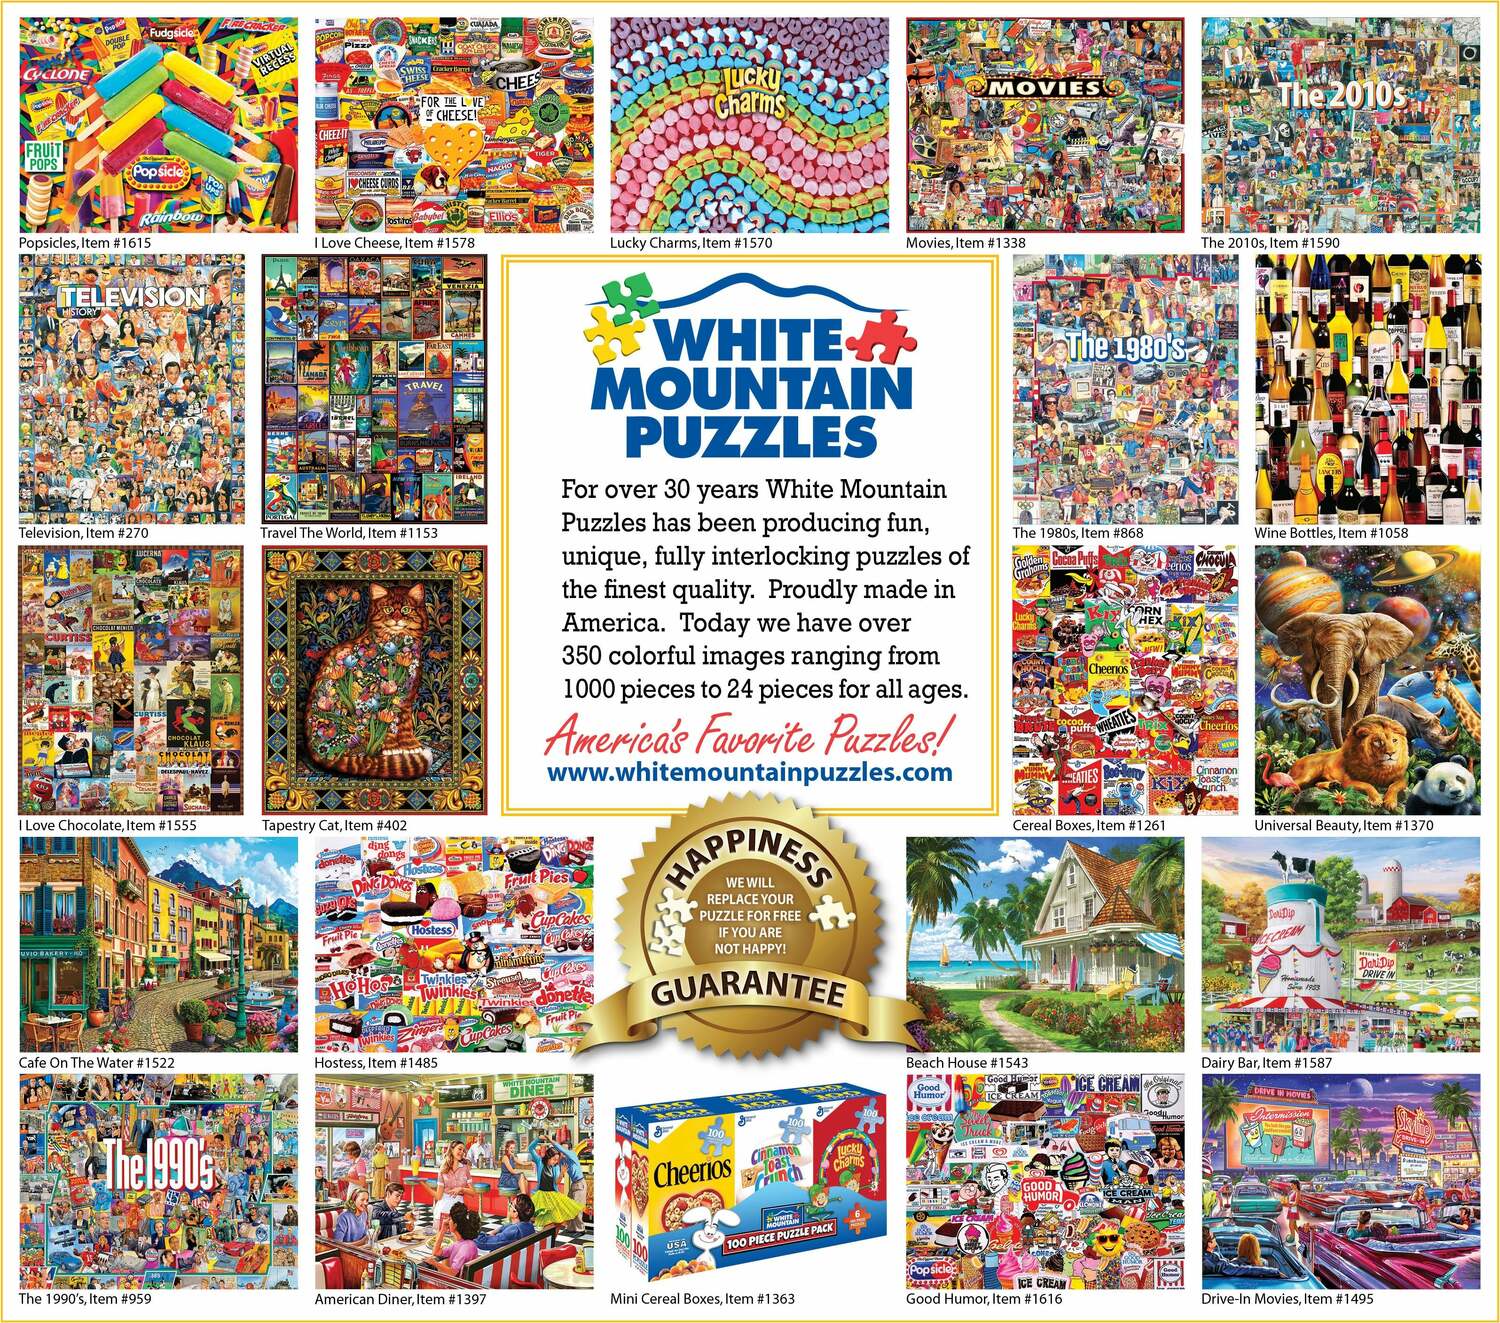 Summer Porch - 1000 Piece Jigsaw Puzzle